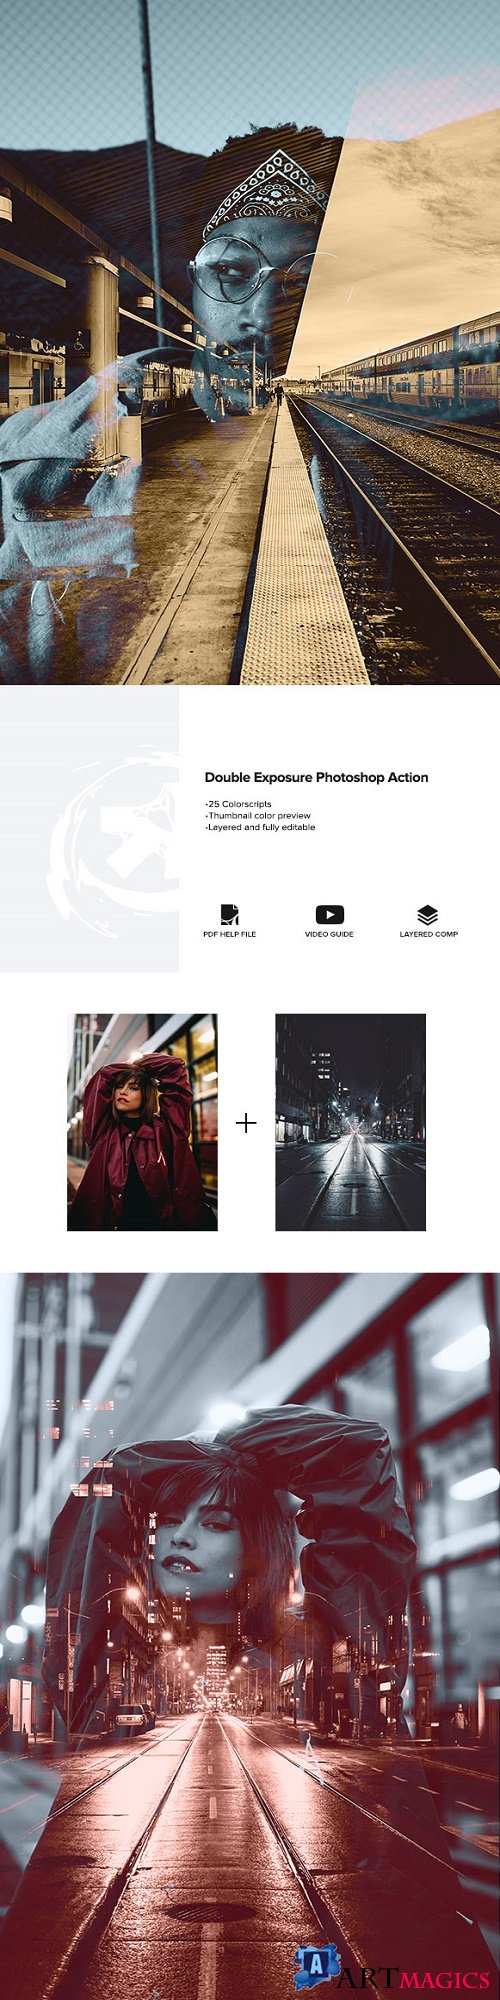 Double Exposure Photoshop Action 21916025